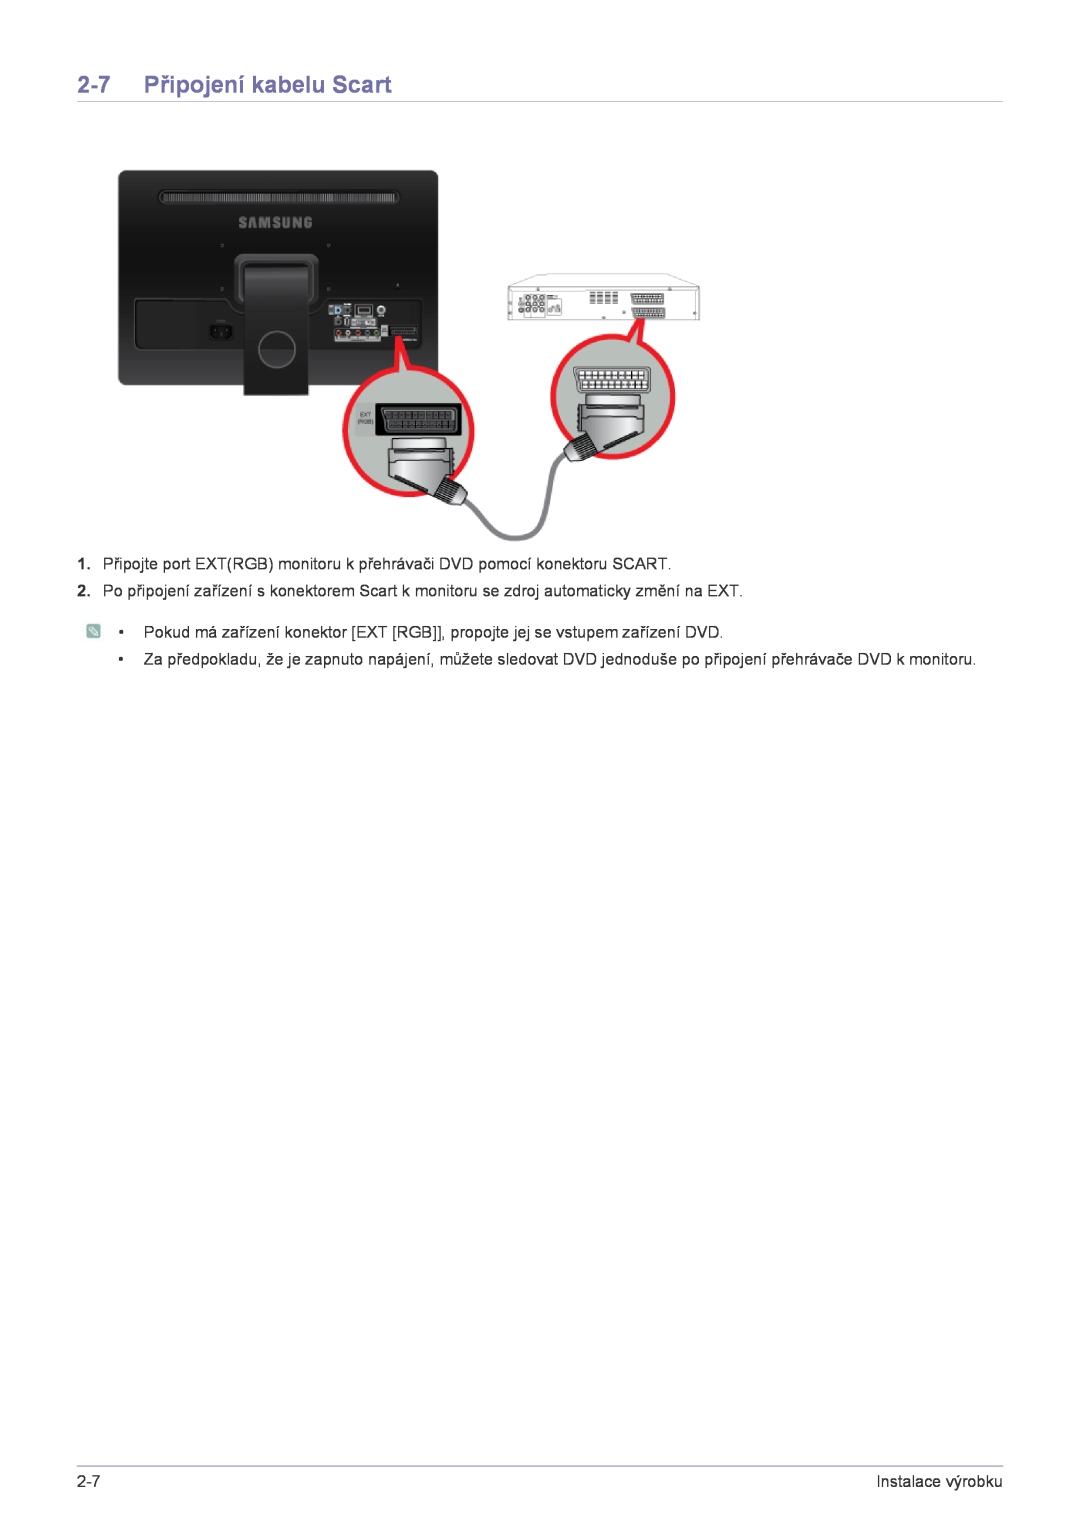 Samsung LS22FMDGF/EN manual 2-7 Připojení kabelu Scart 